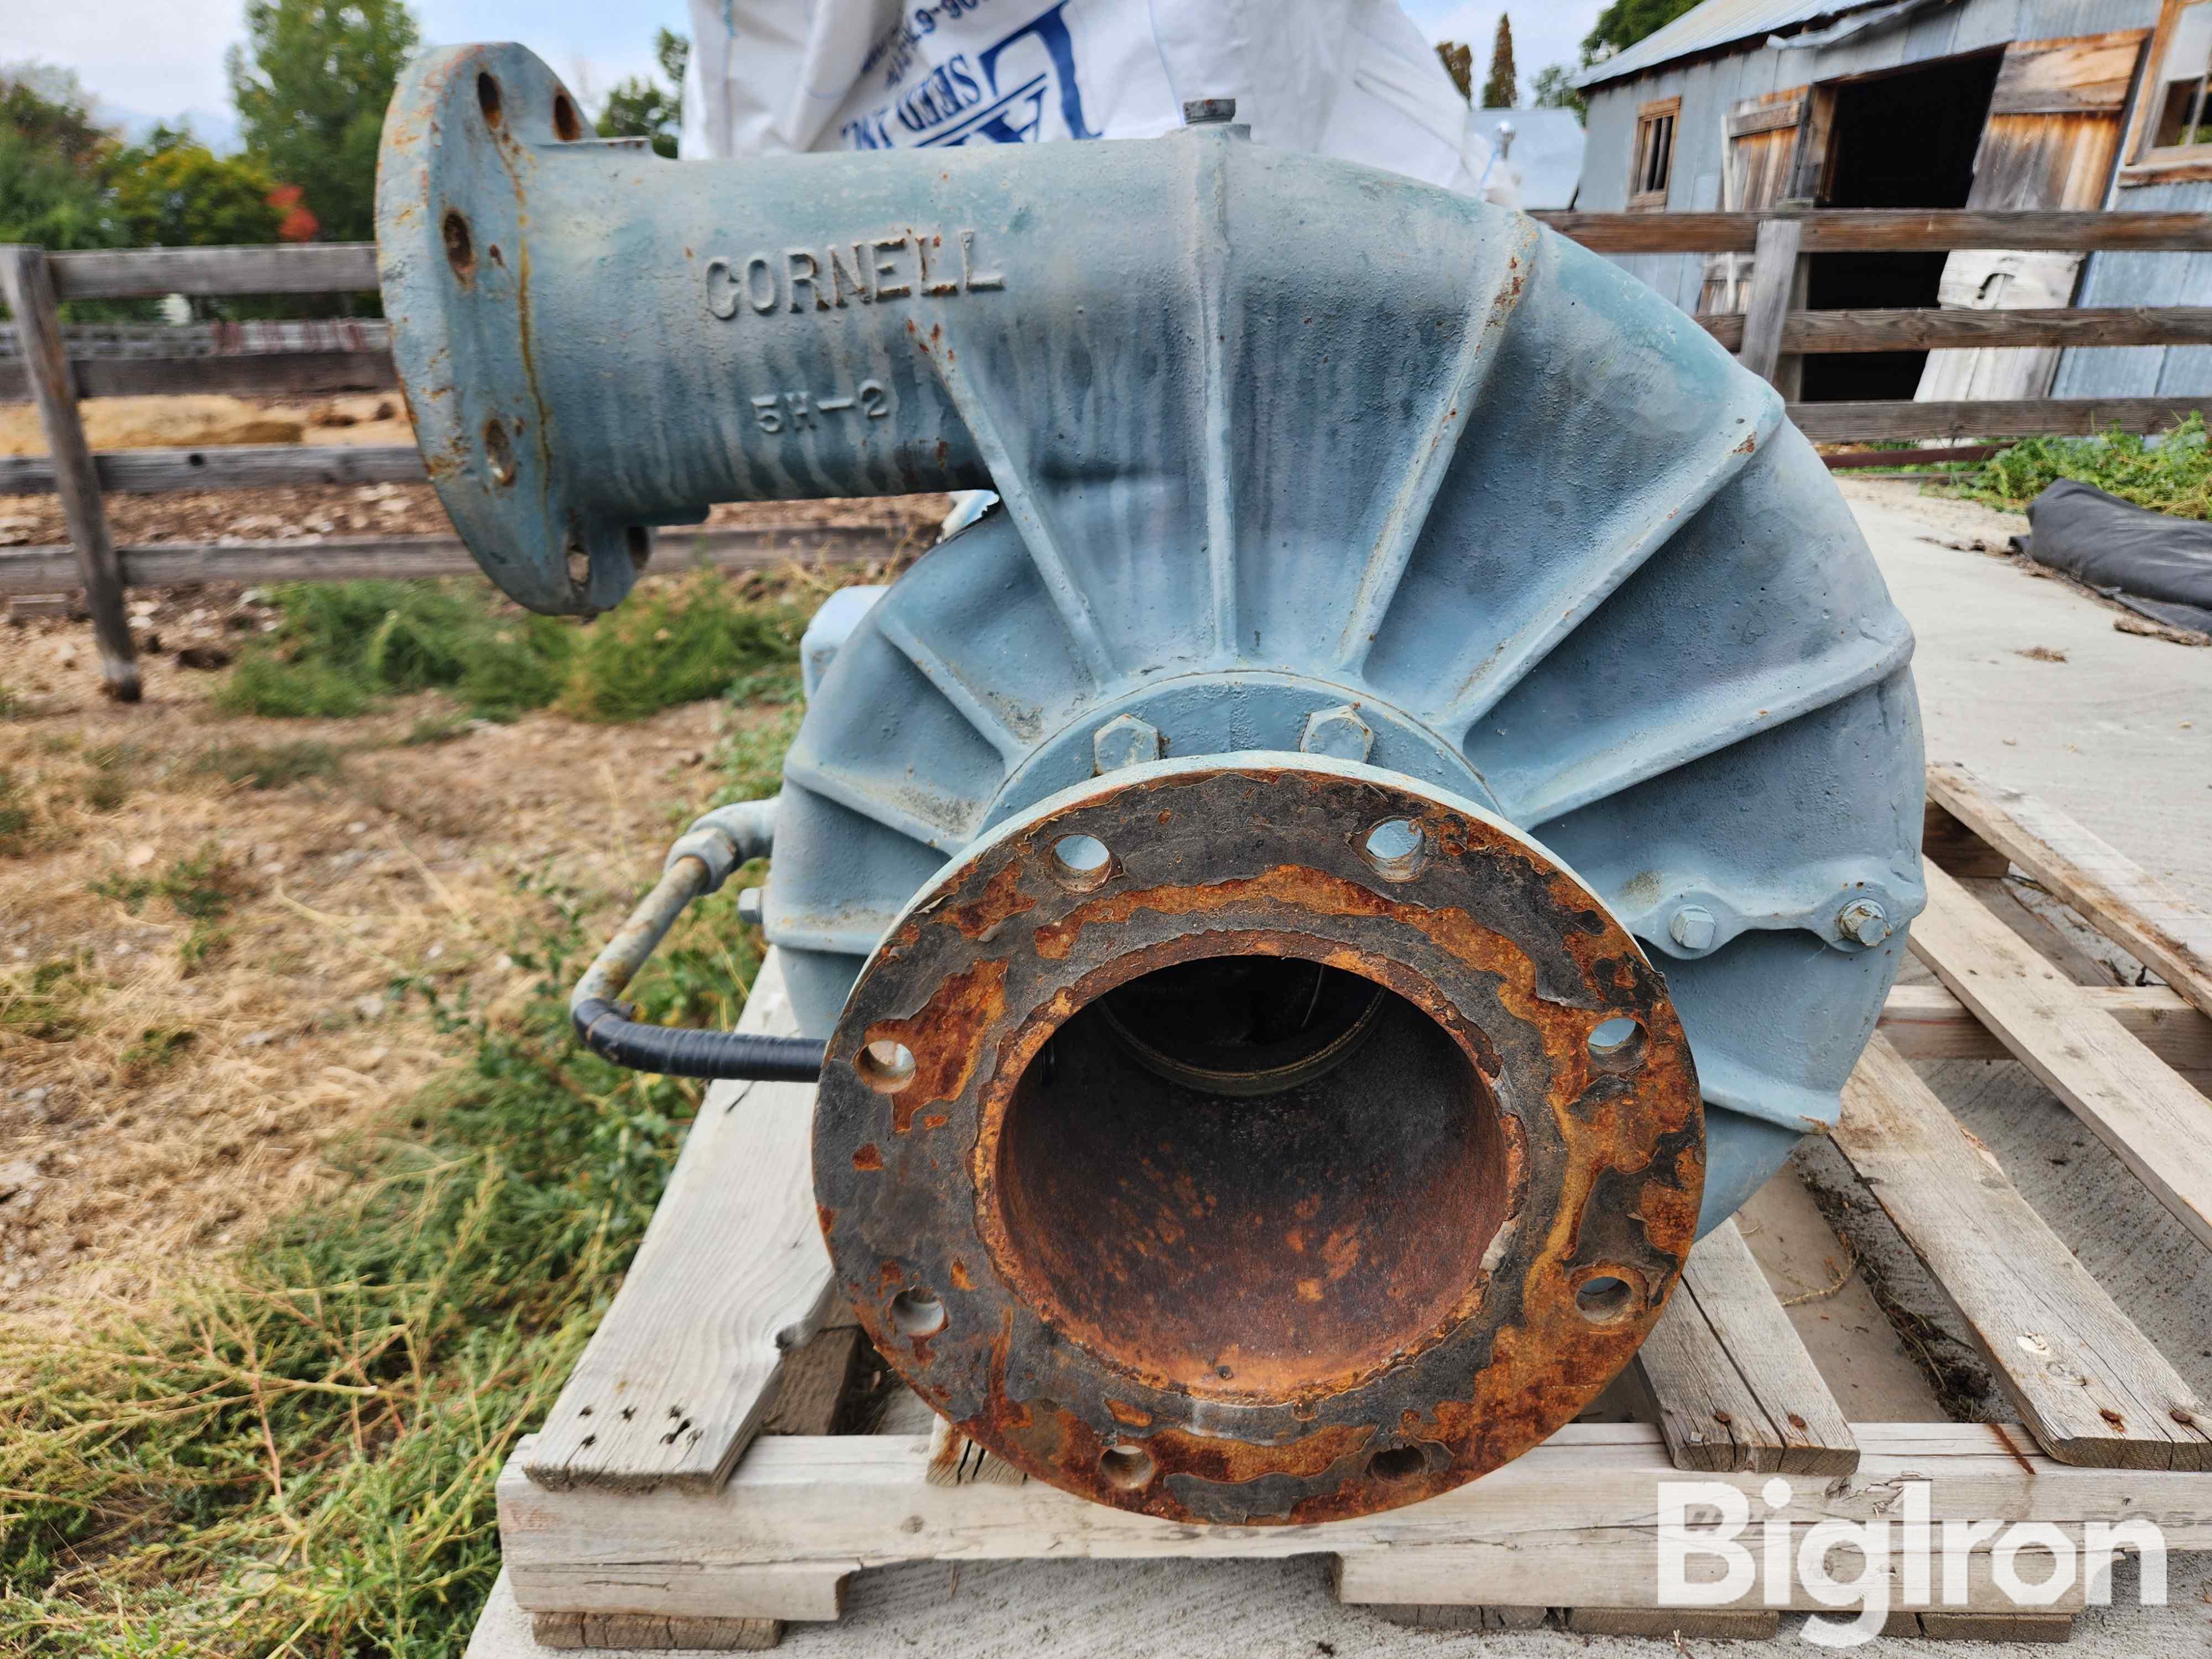 Cornell Water Pump BigIron Auctions